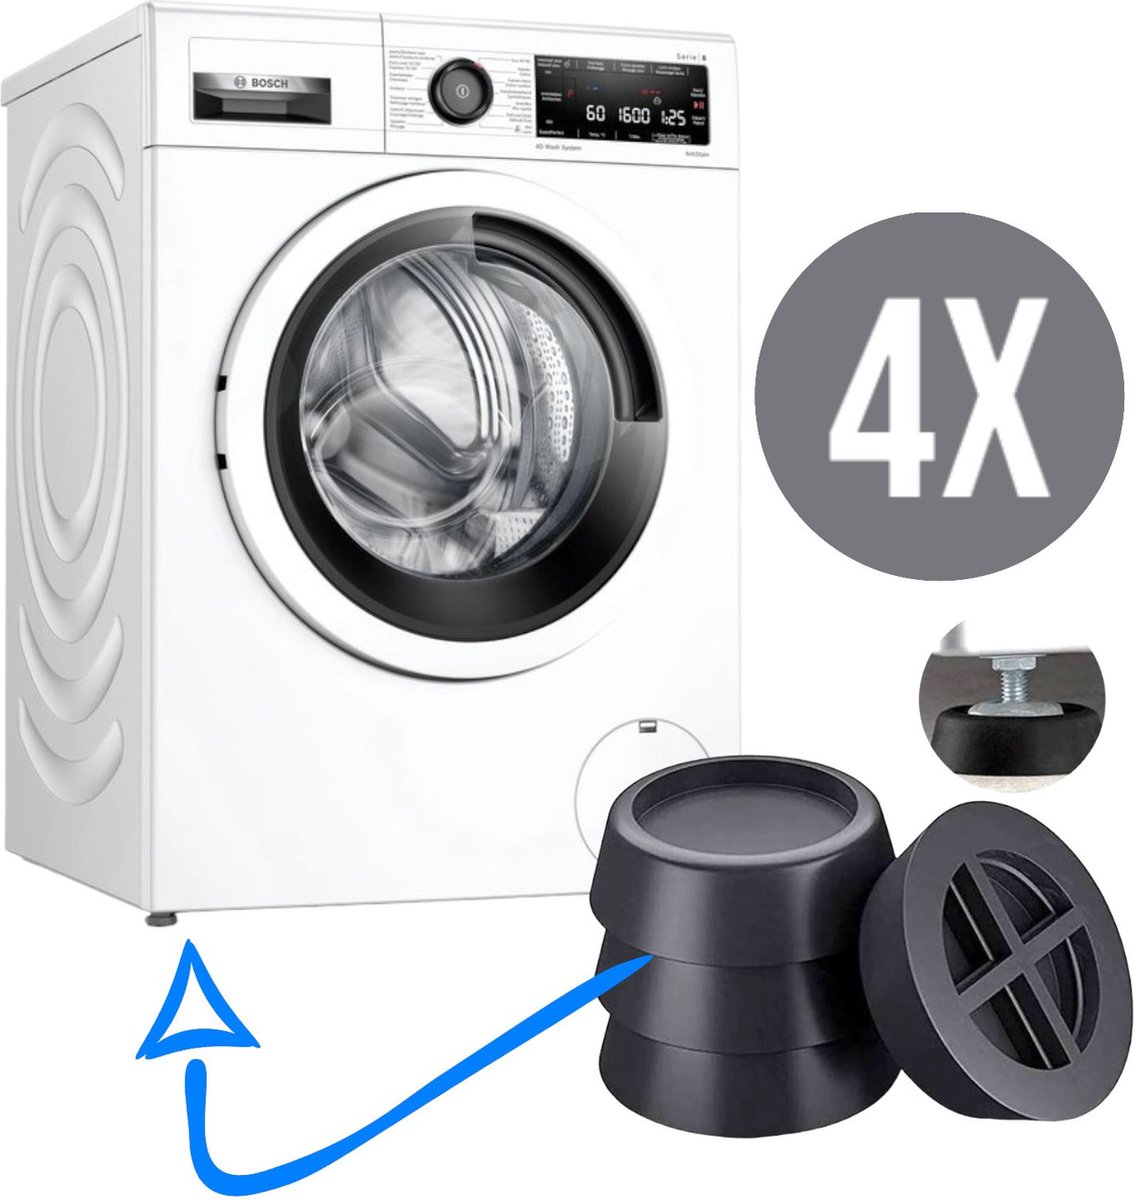 Anti tril - Trillingdempers wasmachine - Set van 4 stuks - Anti slip - Wasmachine demper- Wasmachine geluid demper - Voetjes - Wasmachine - Vibratie demper